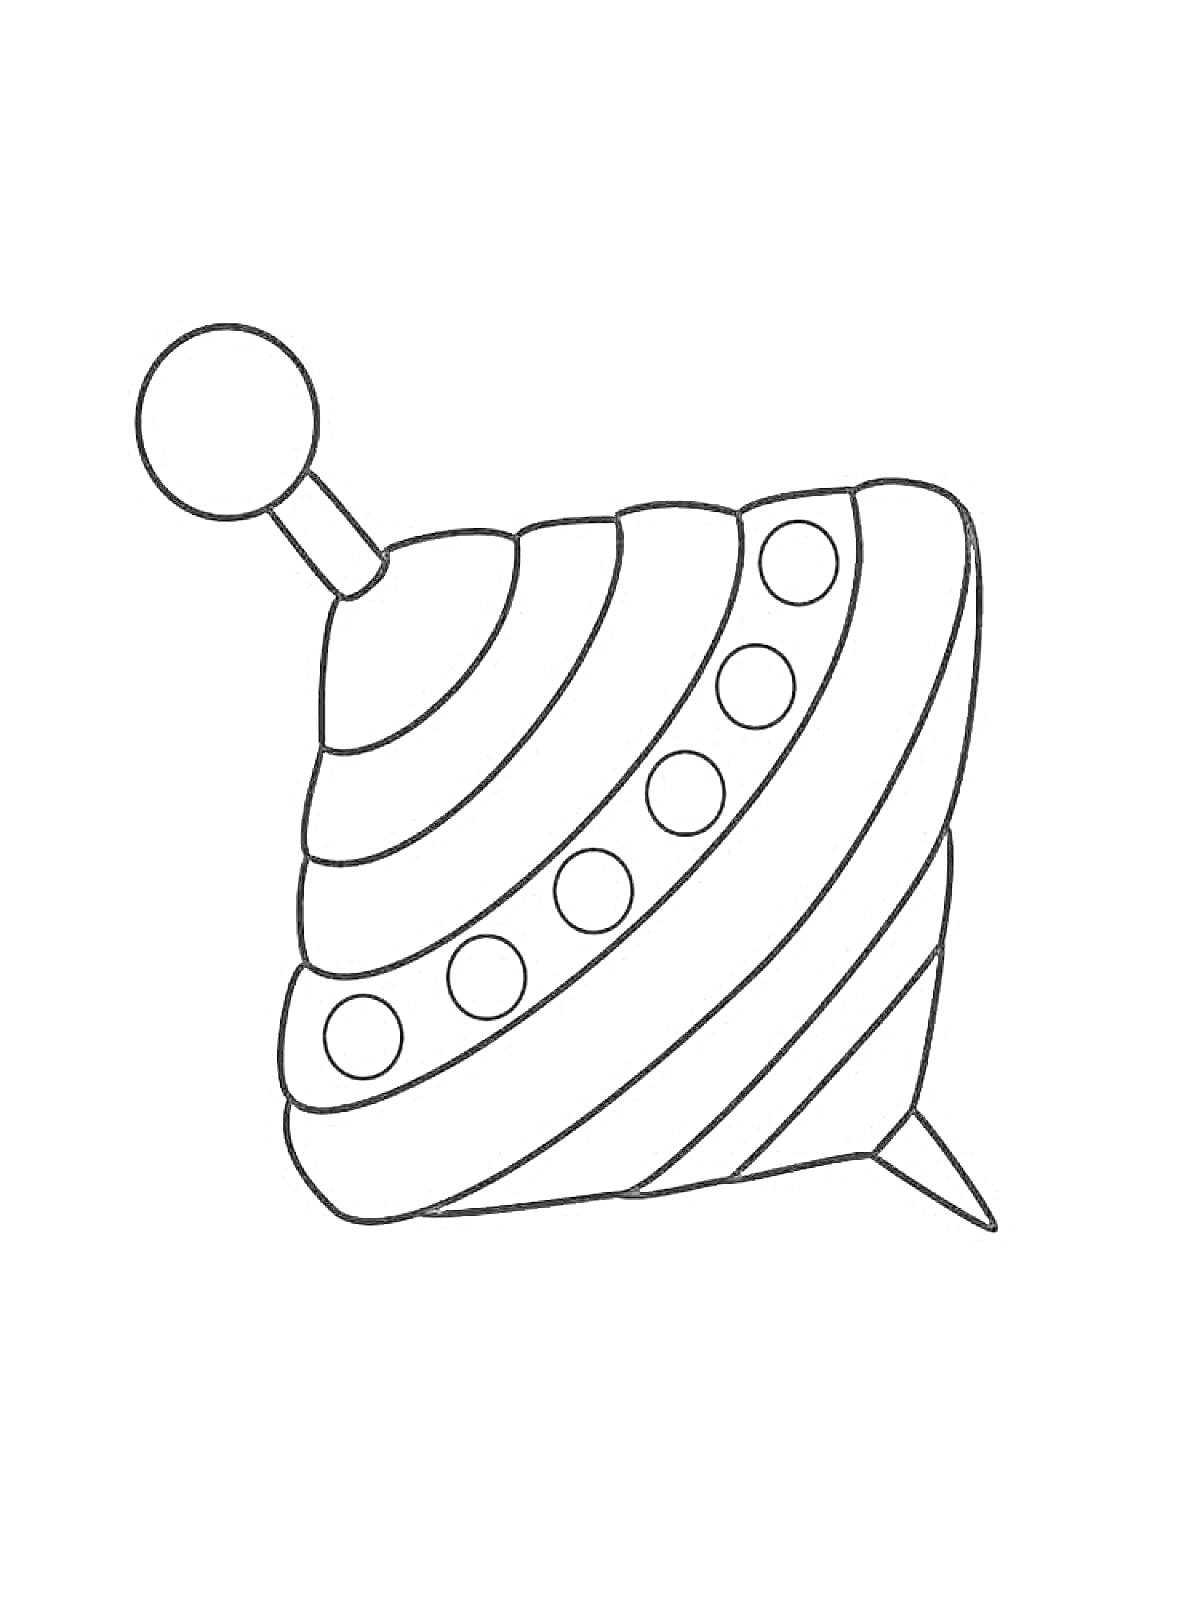 Раскраска Юла с полосками и точками